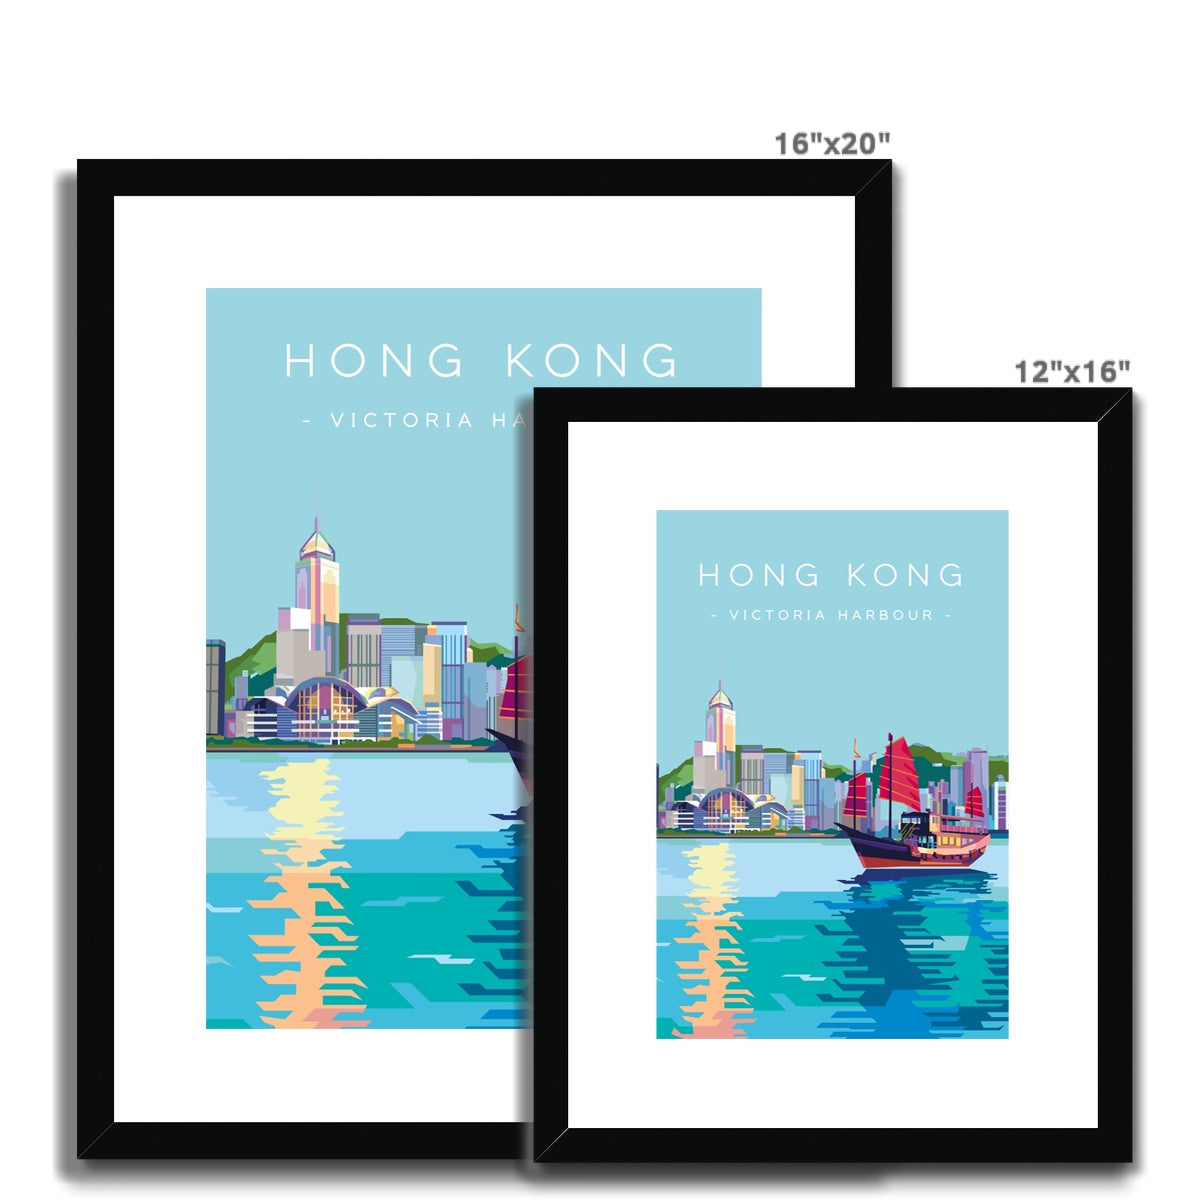 Hong Kong Travel - Victoria Harbour Aqua Luna Framed & Mounted Print